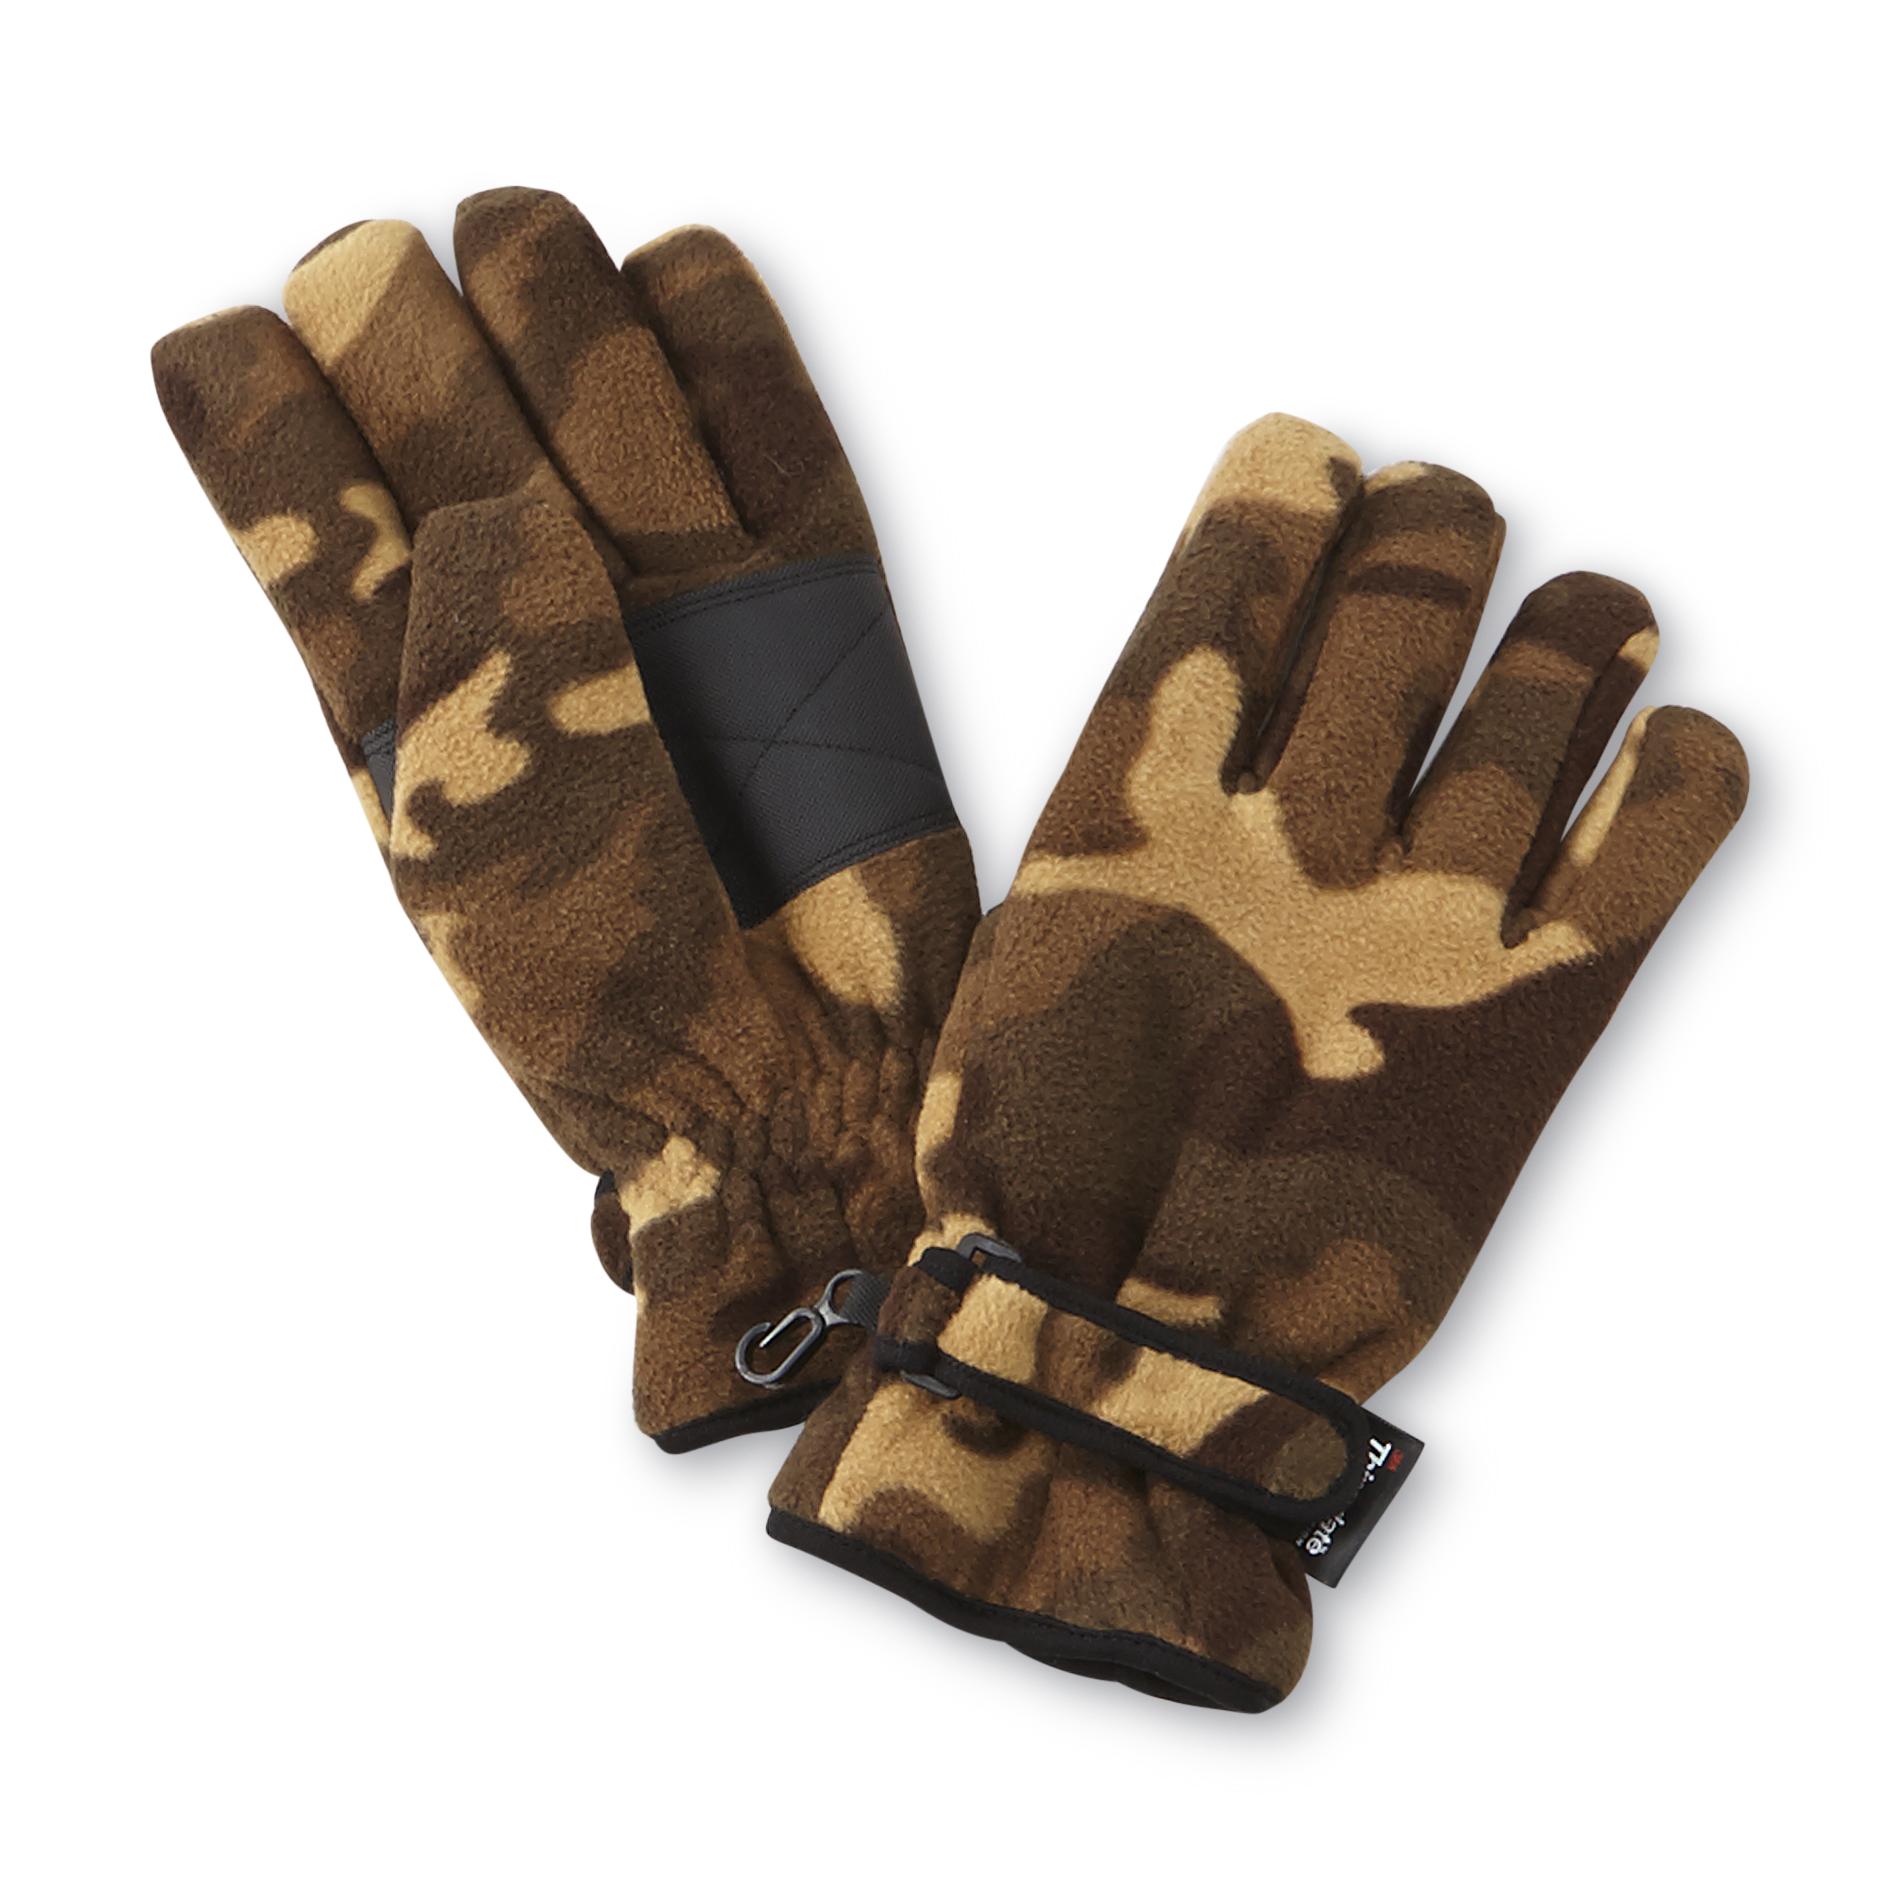 NordicTrack Men's Insulated Fleece Gloves - Camouflage